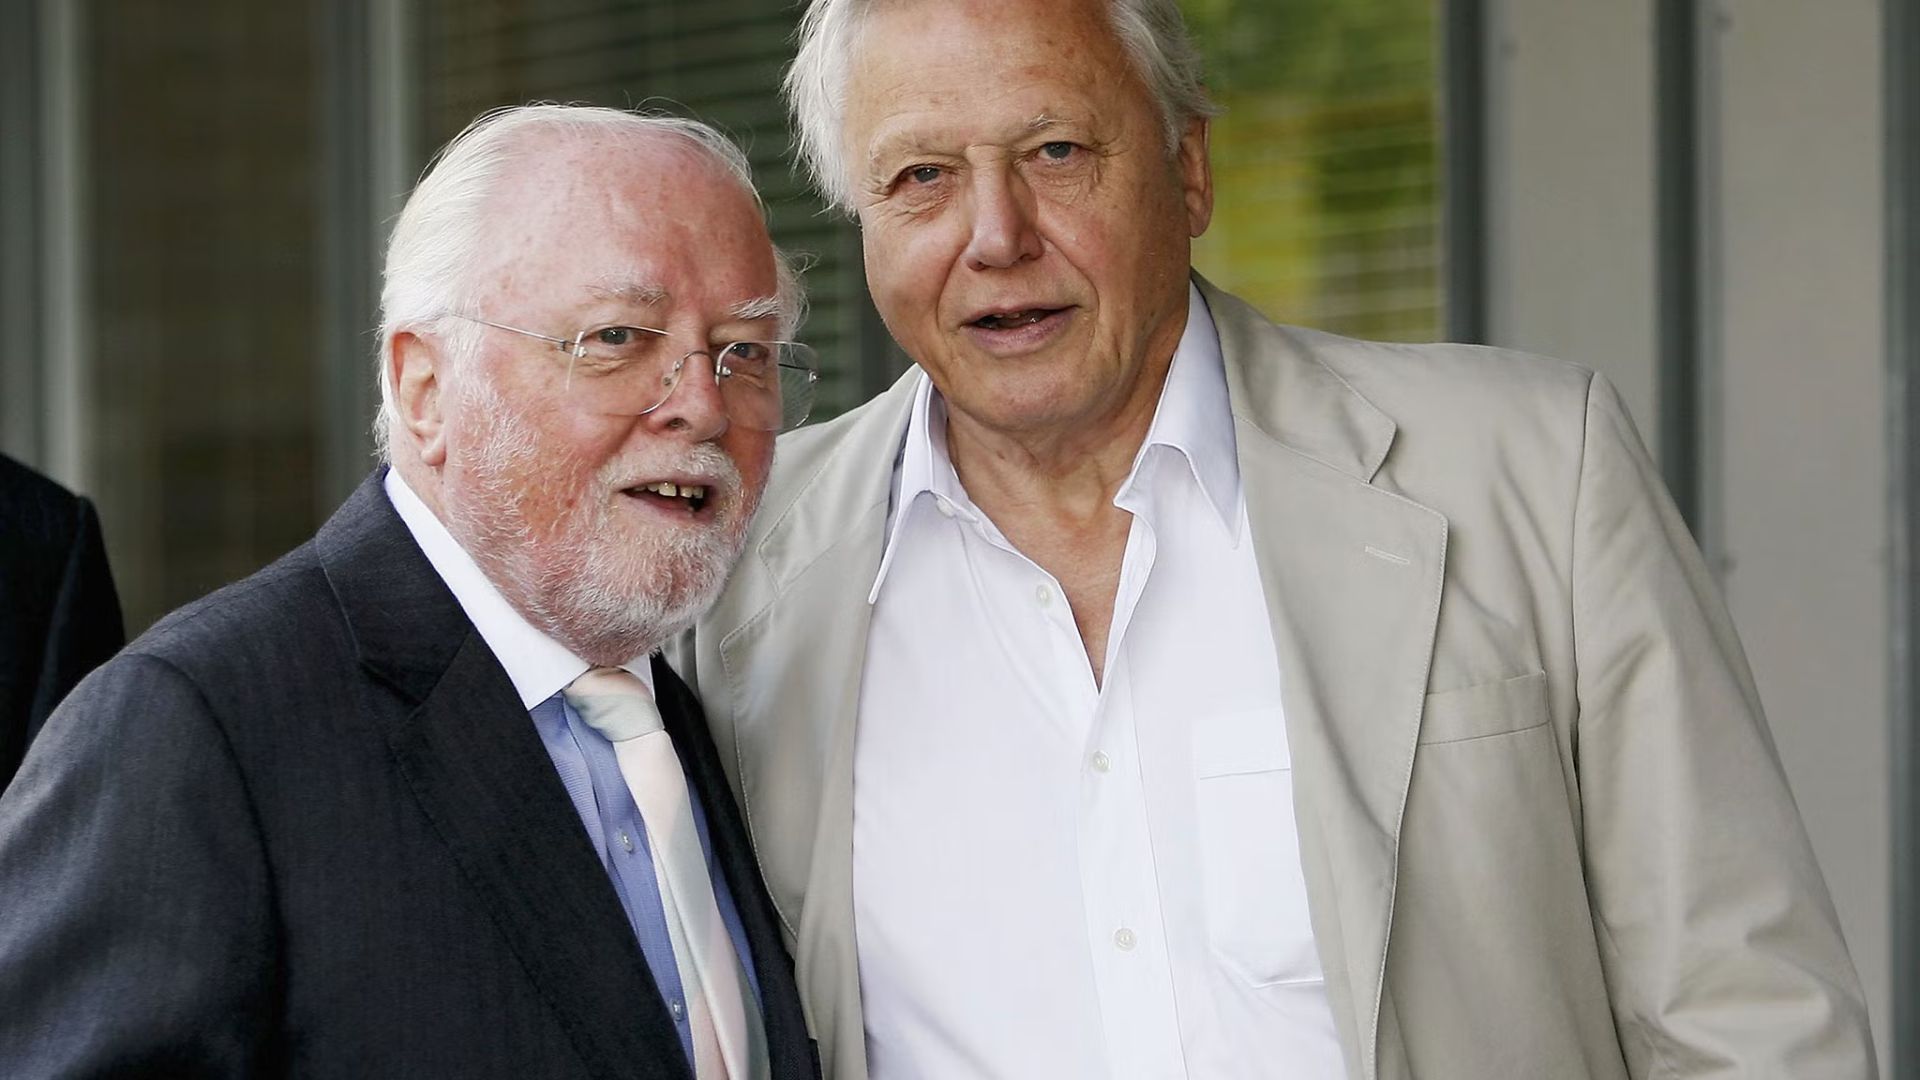 Lord Richard Attenborough with Brother Sir David Attenborough